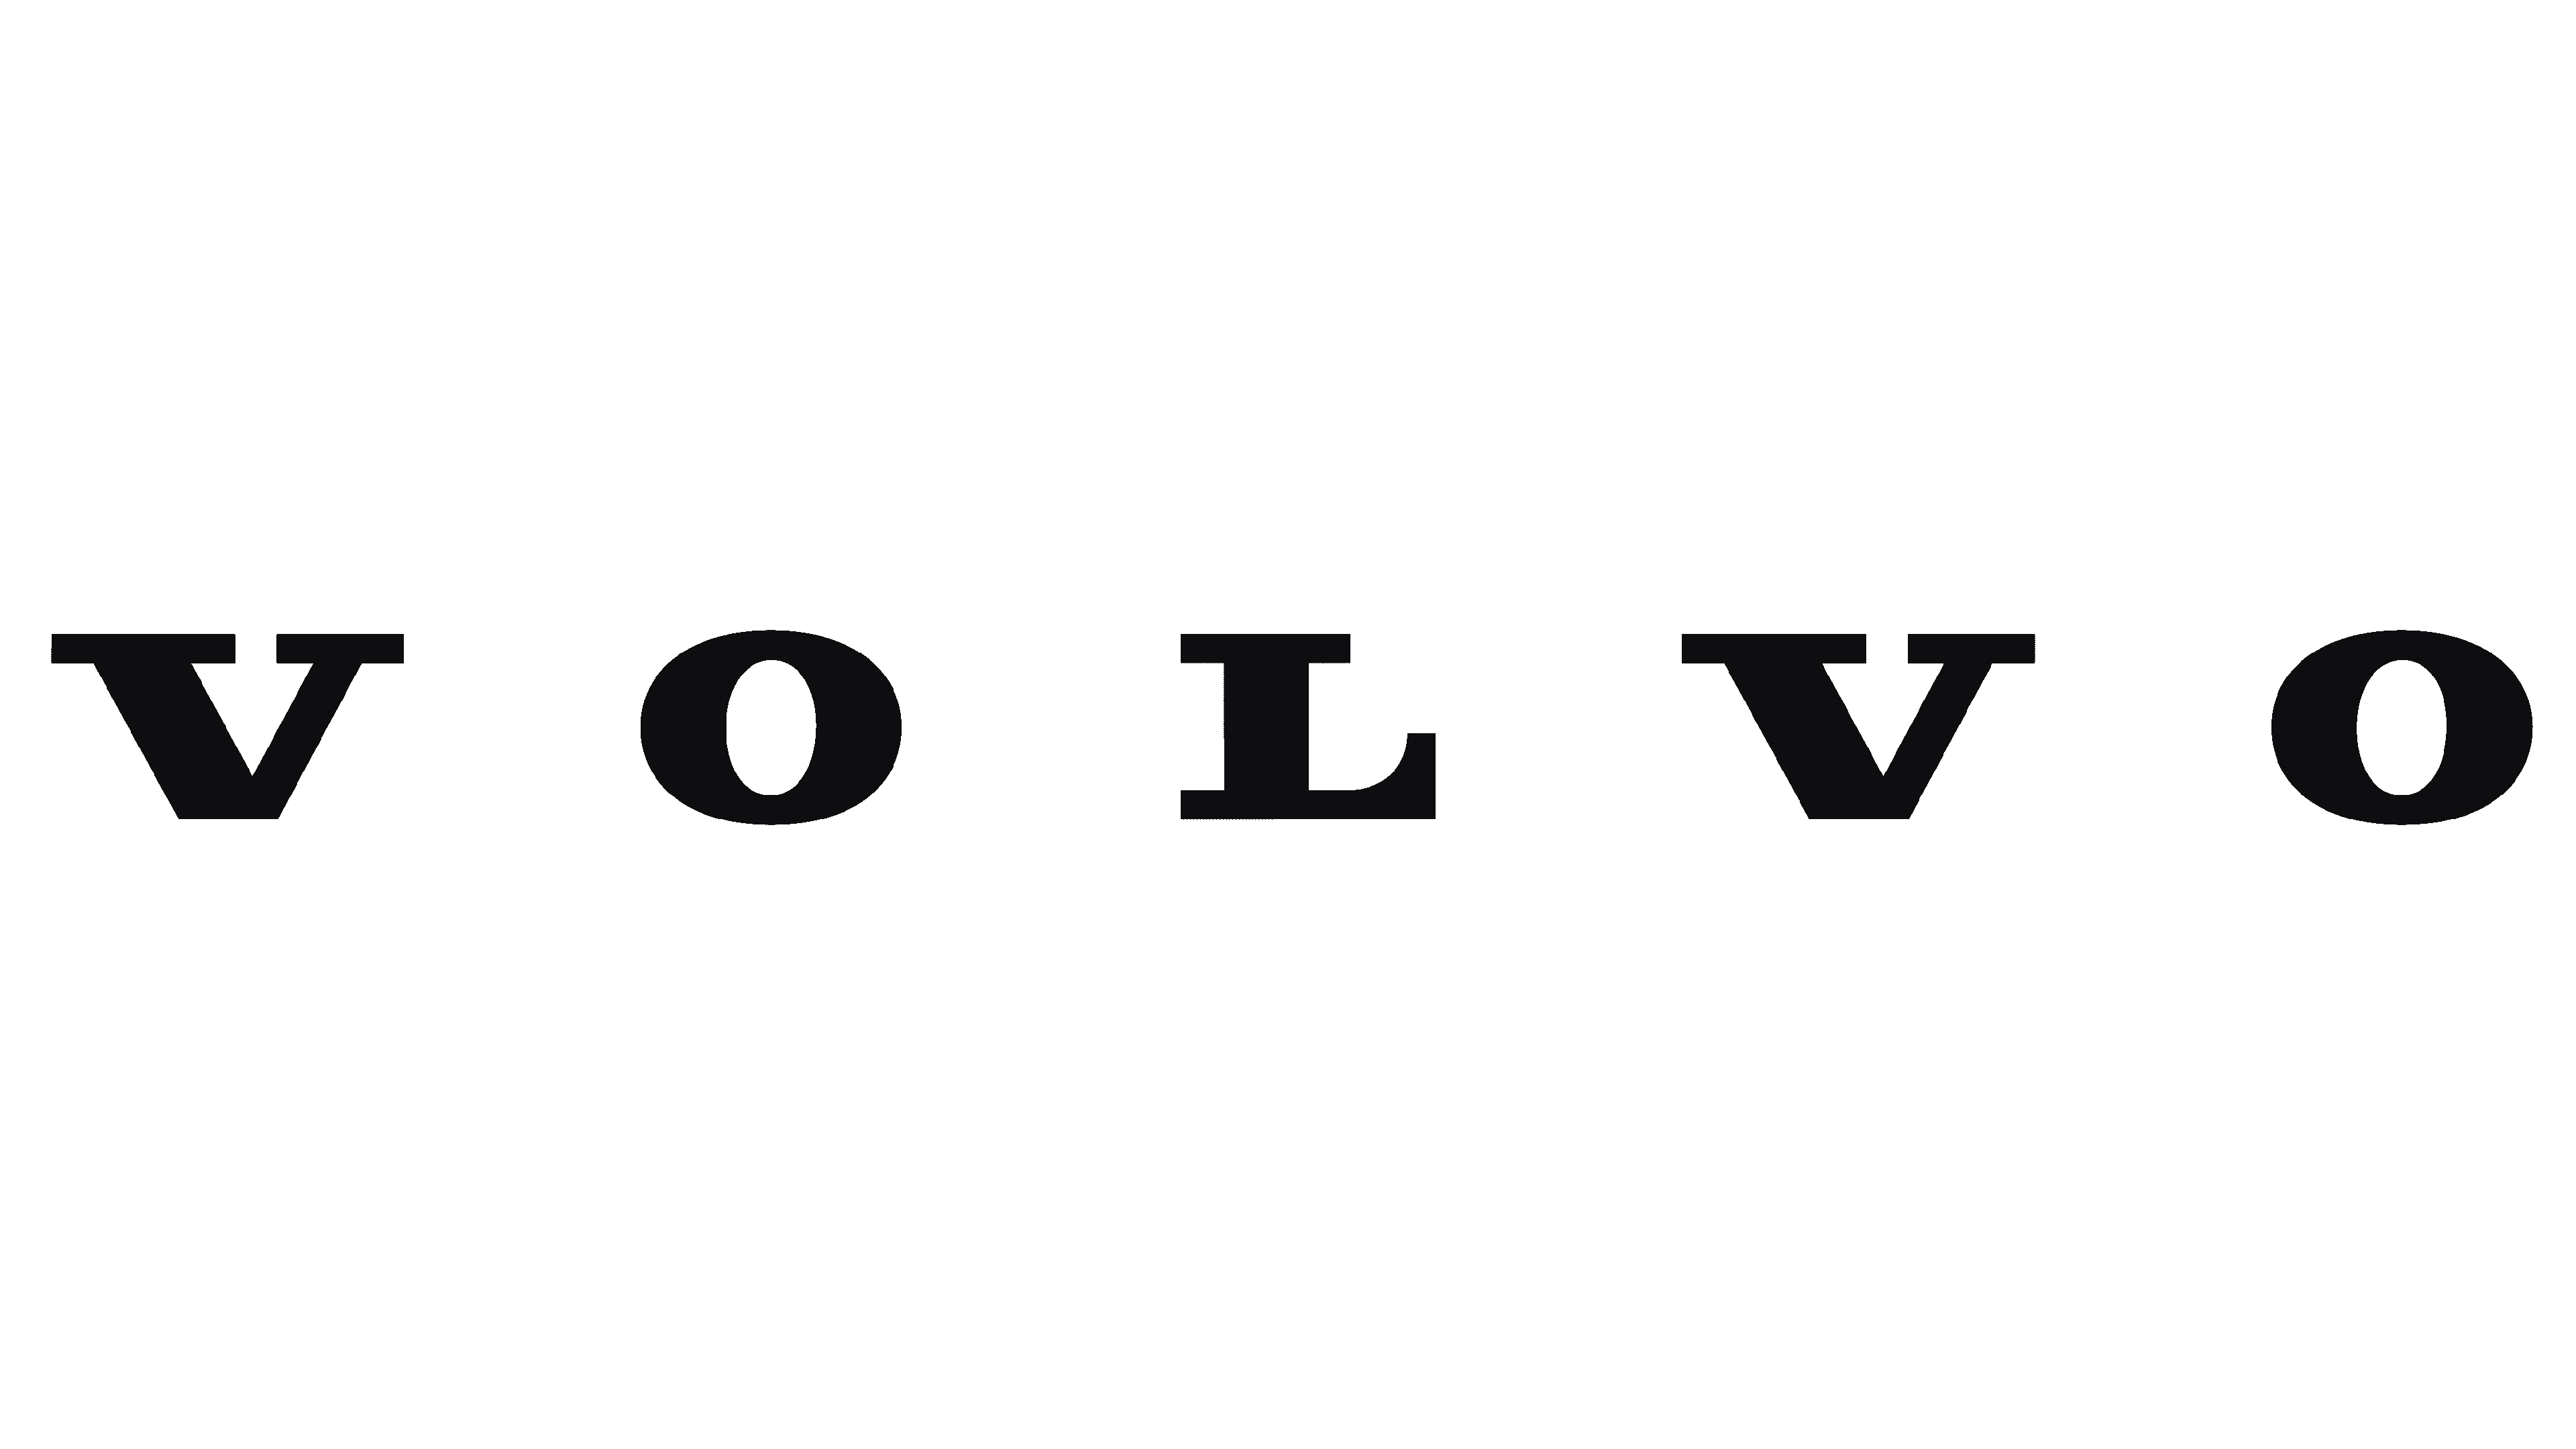 Volvo's logo